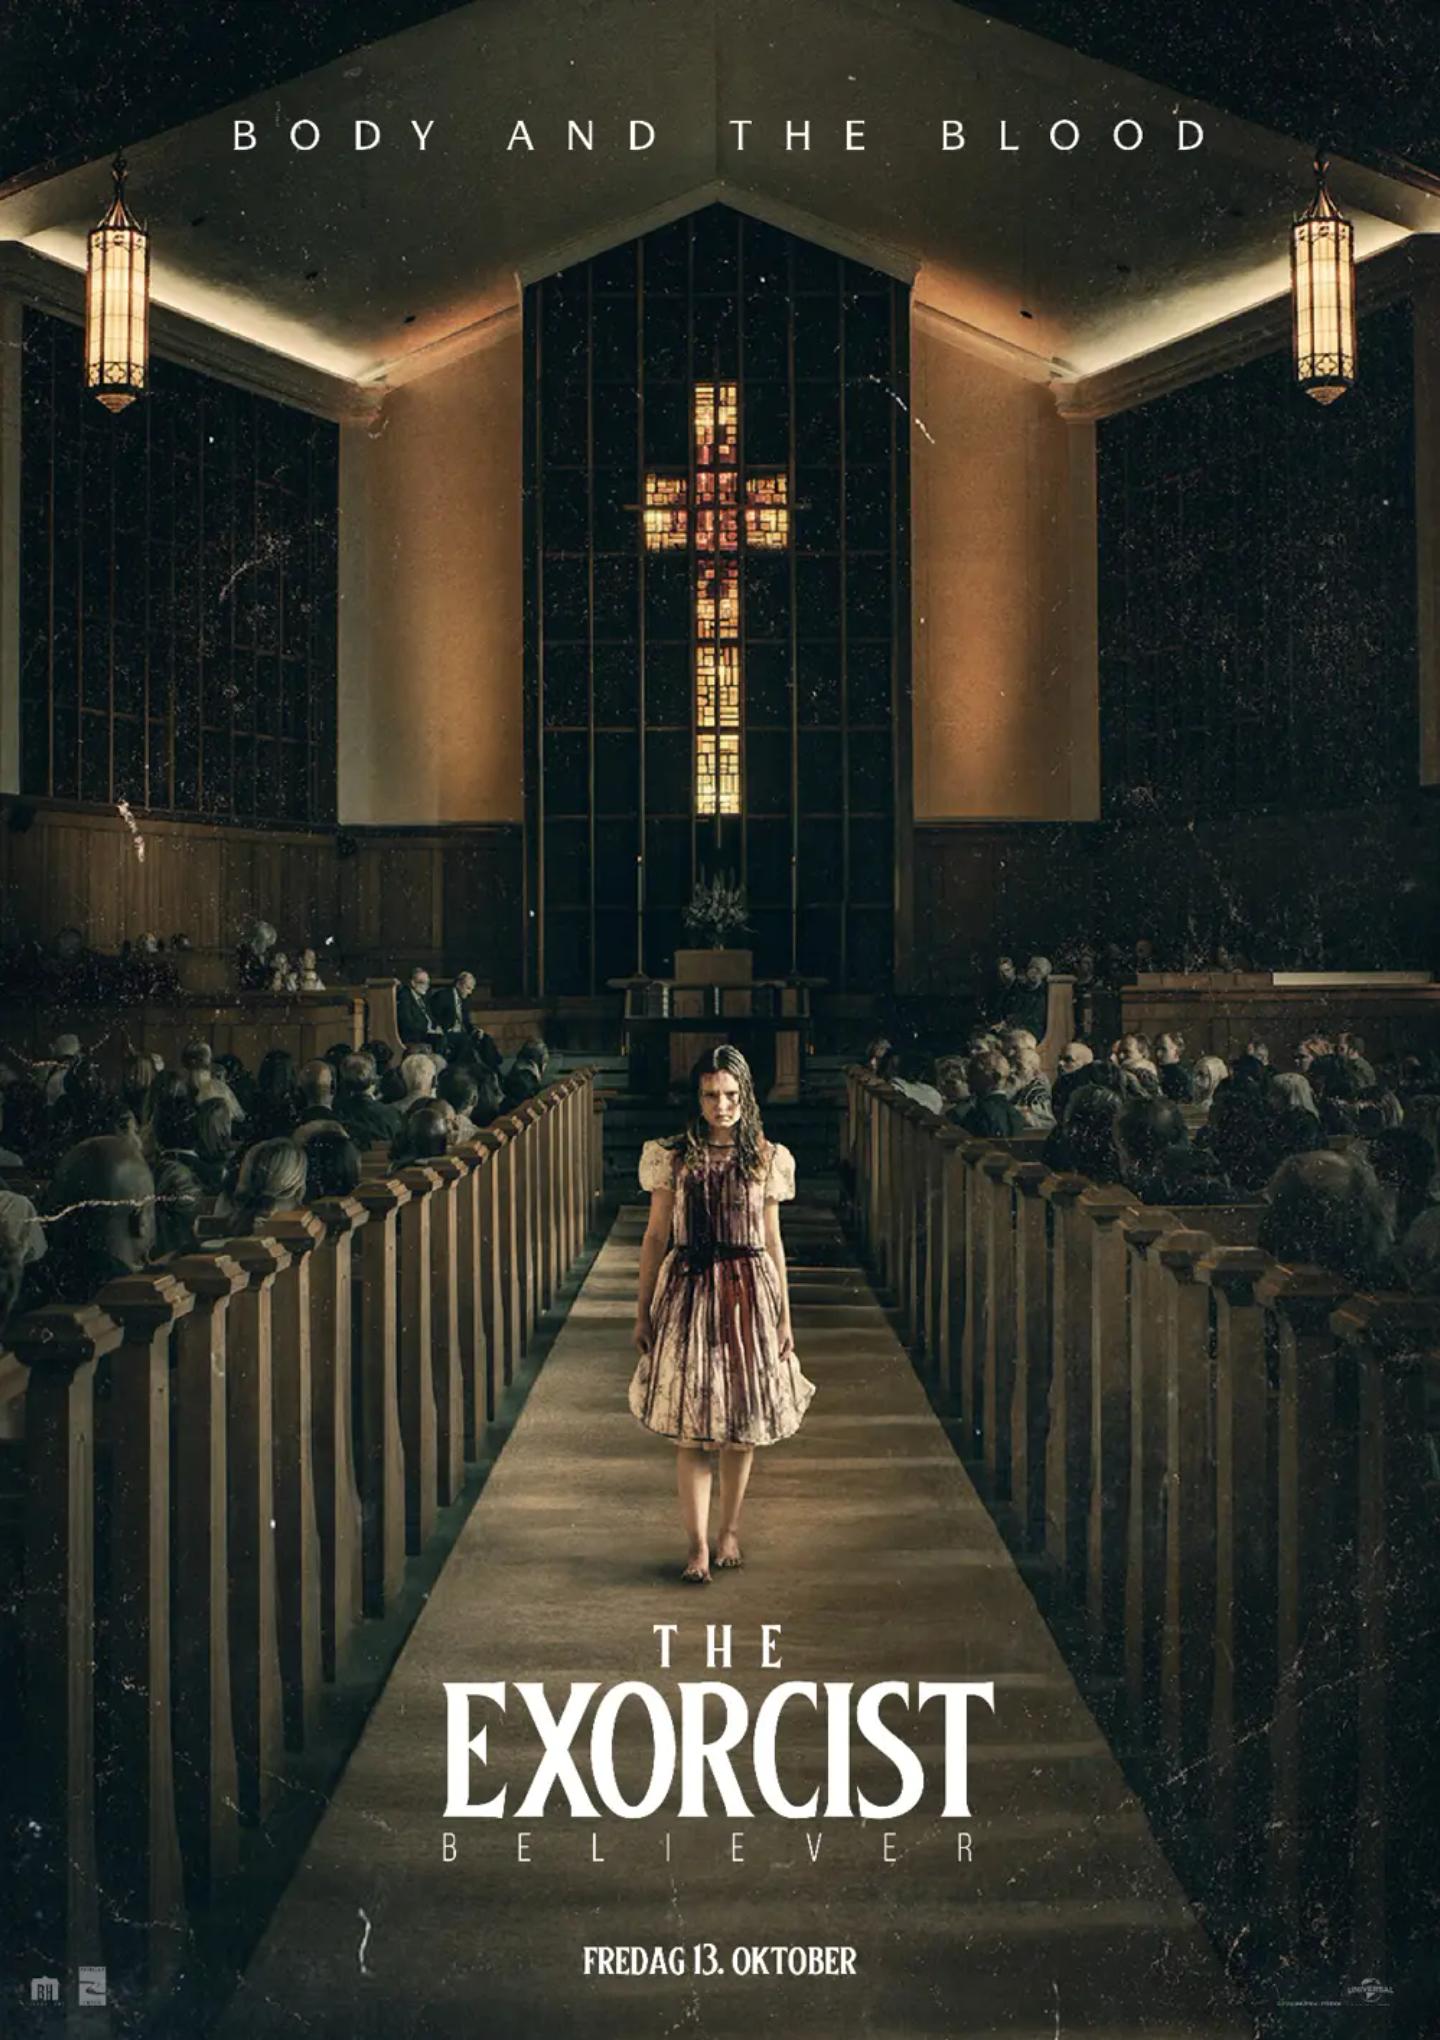 Plakat for 'The Exorcist: Believer'